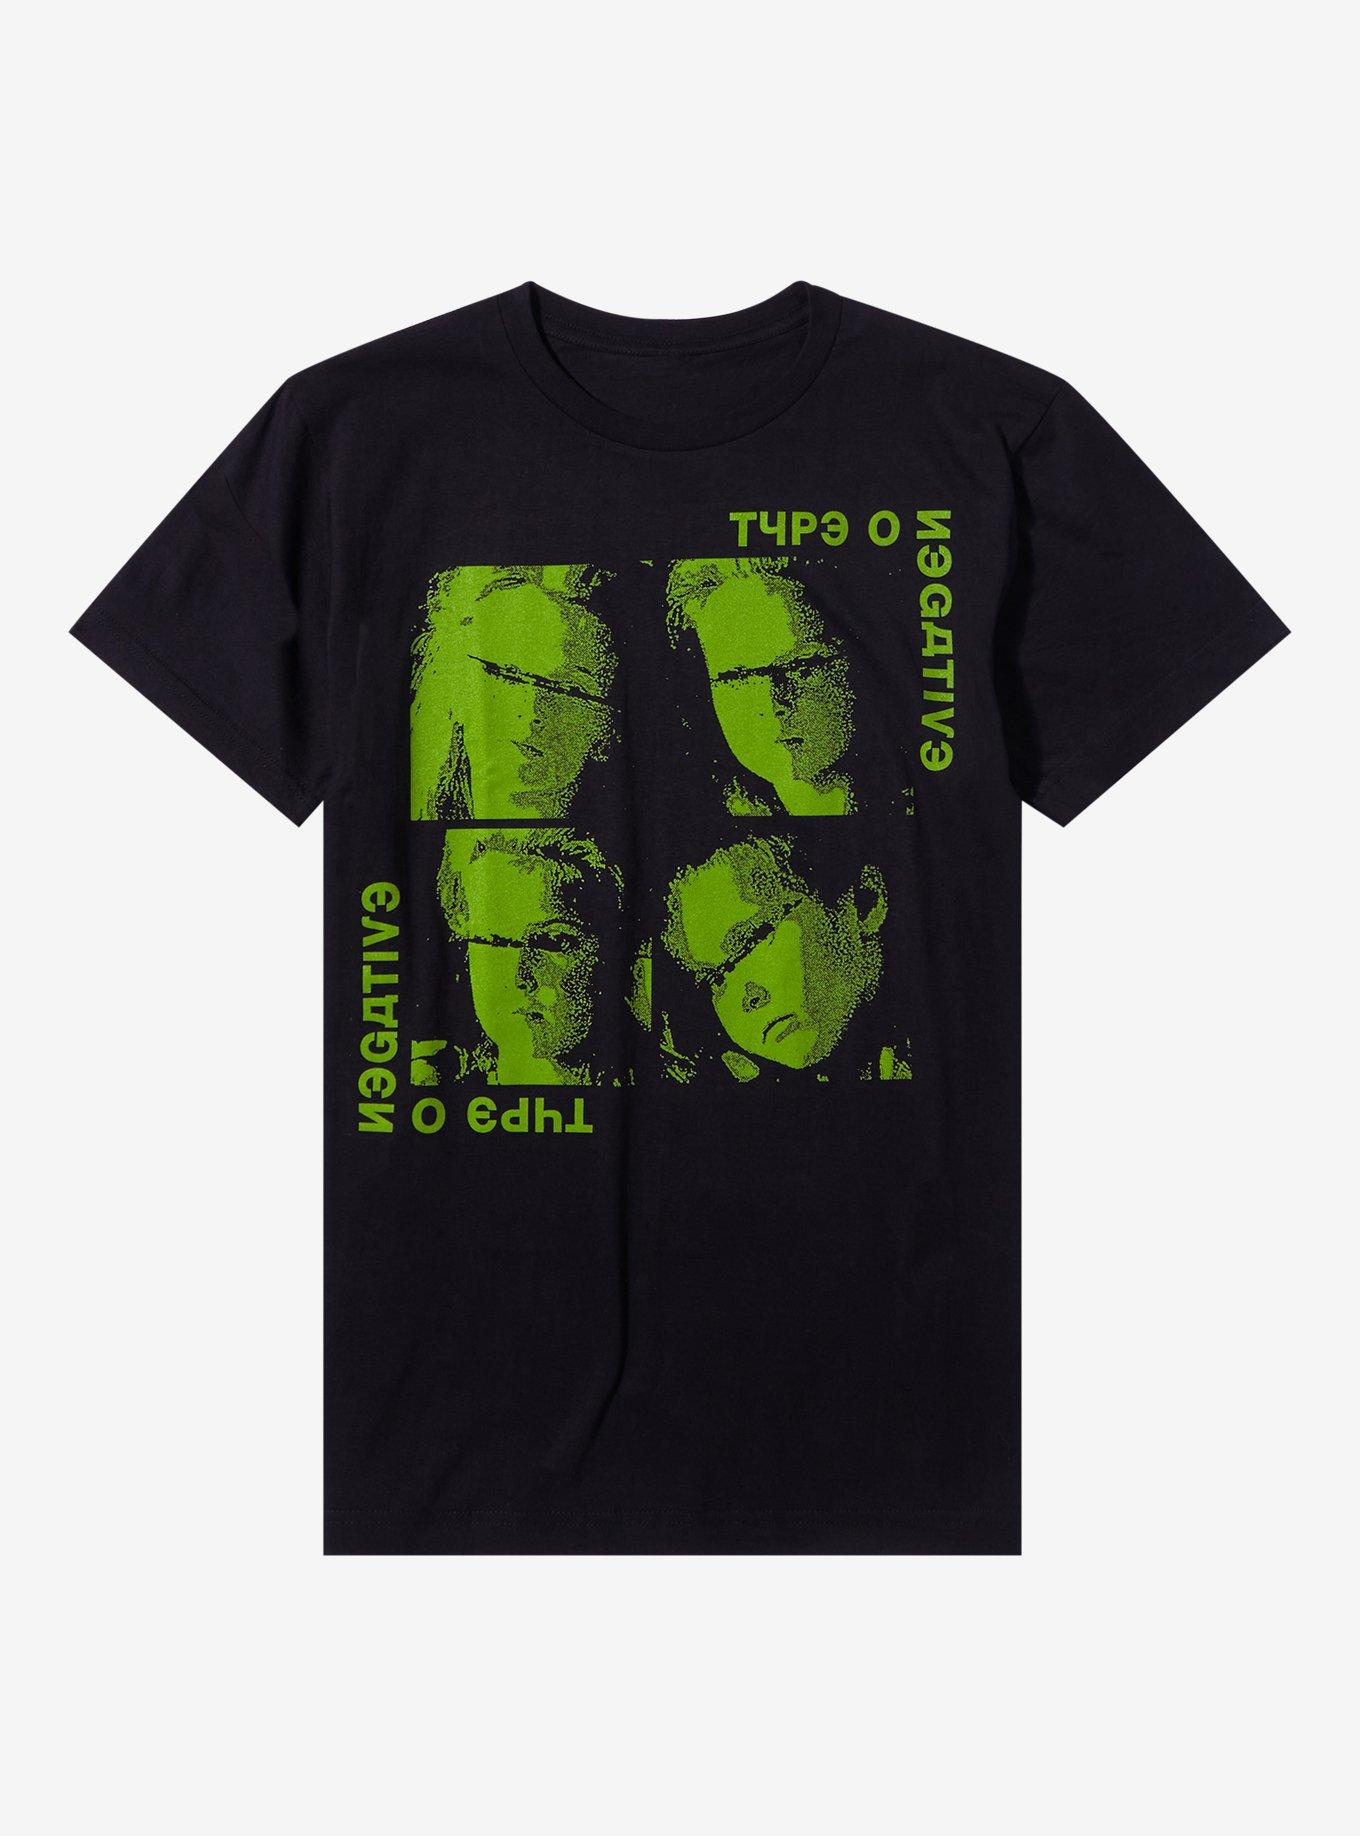 Type O Negative 'Faces' (Black) T-Shirt